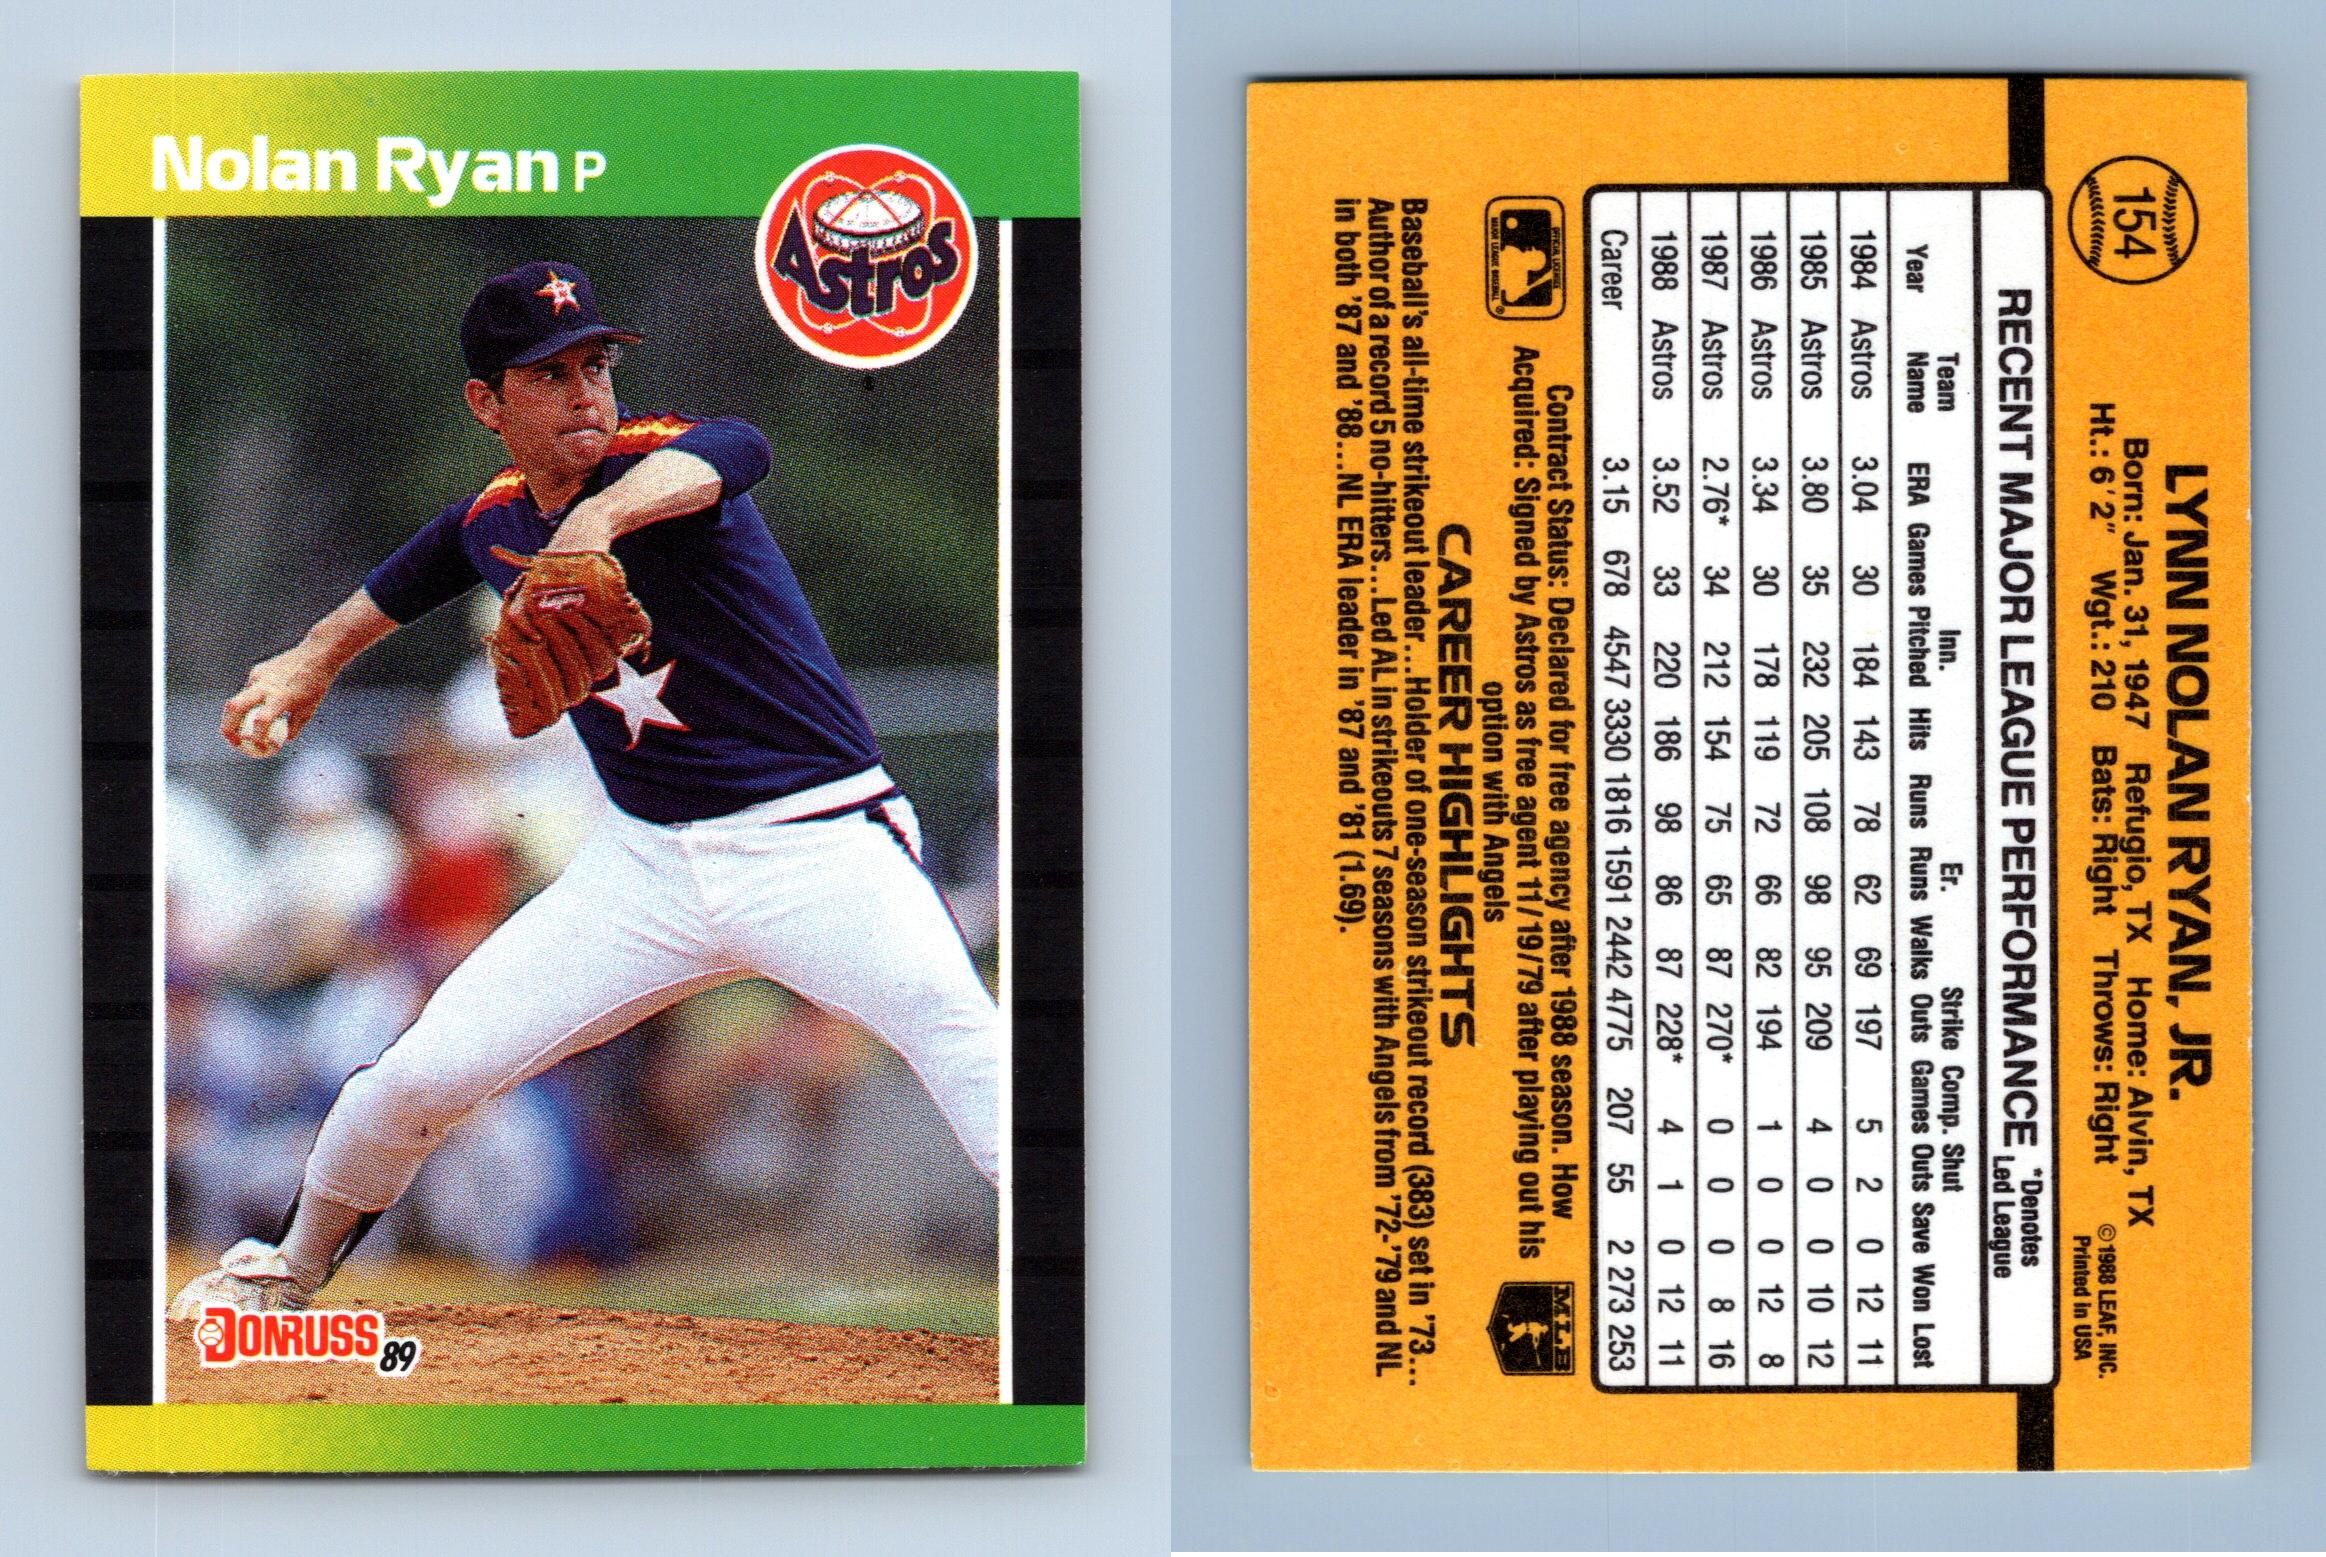 1989 Topps Traded Nolan Ryan Baseball Card